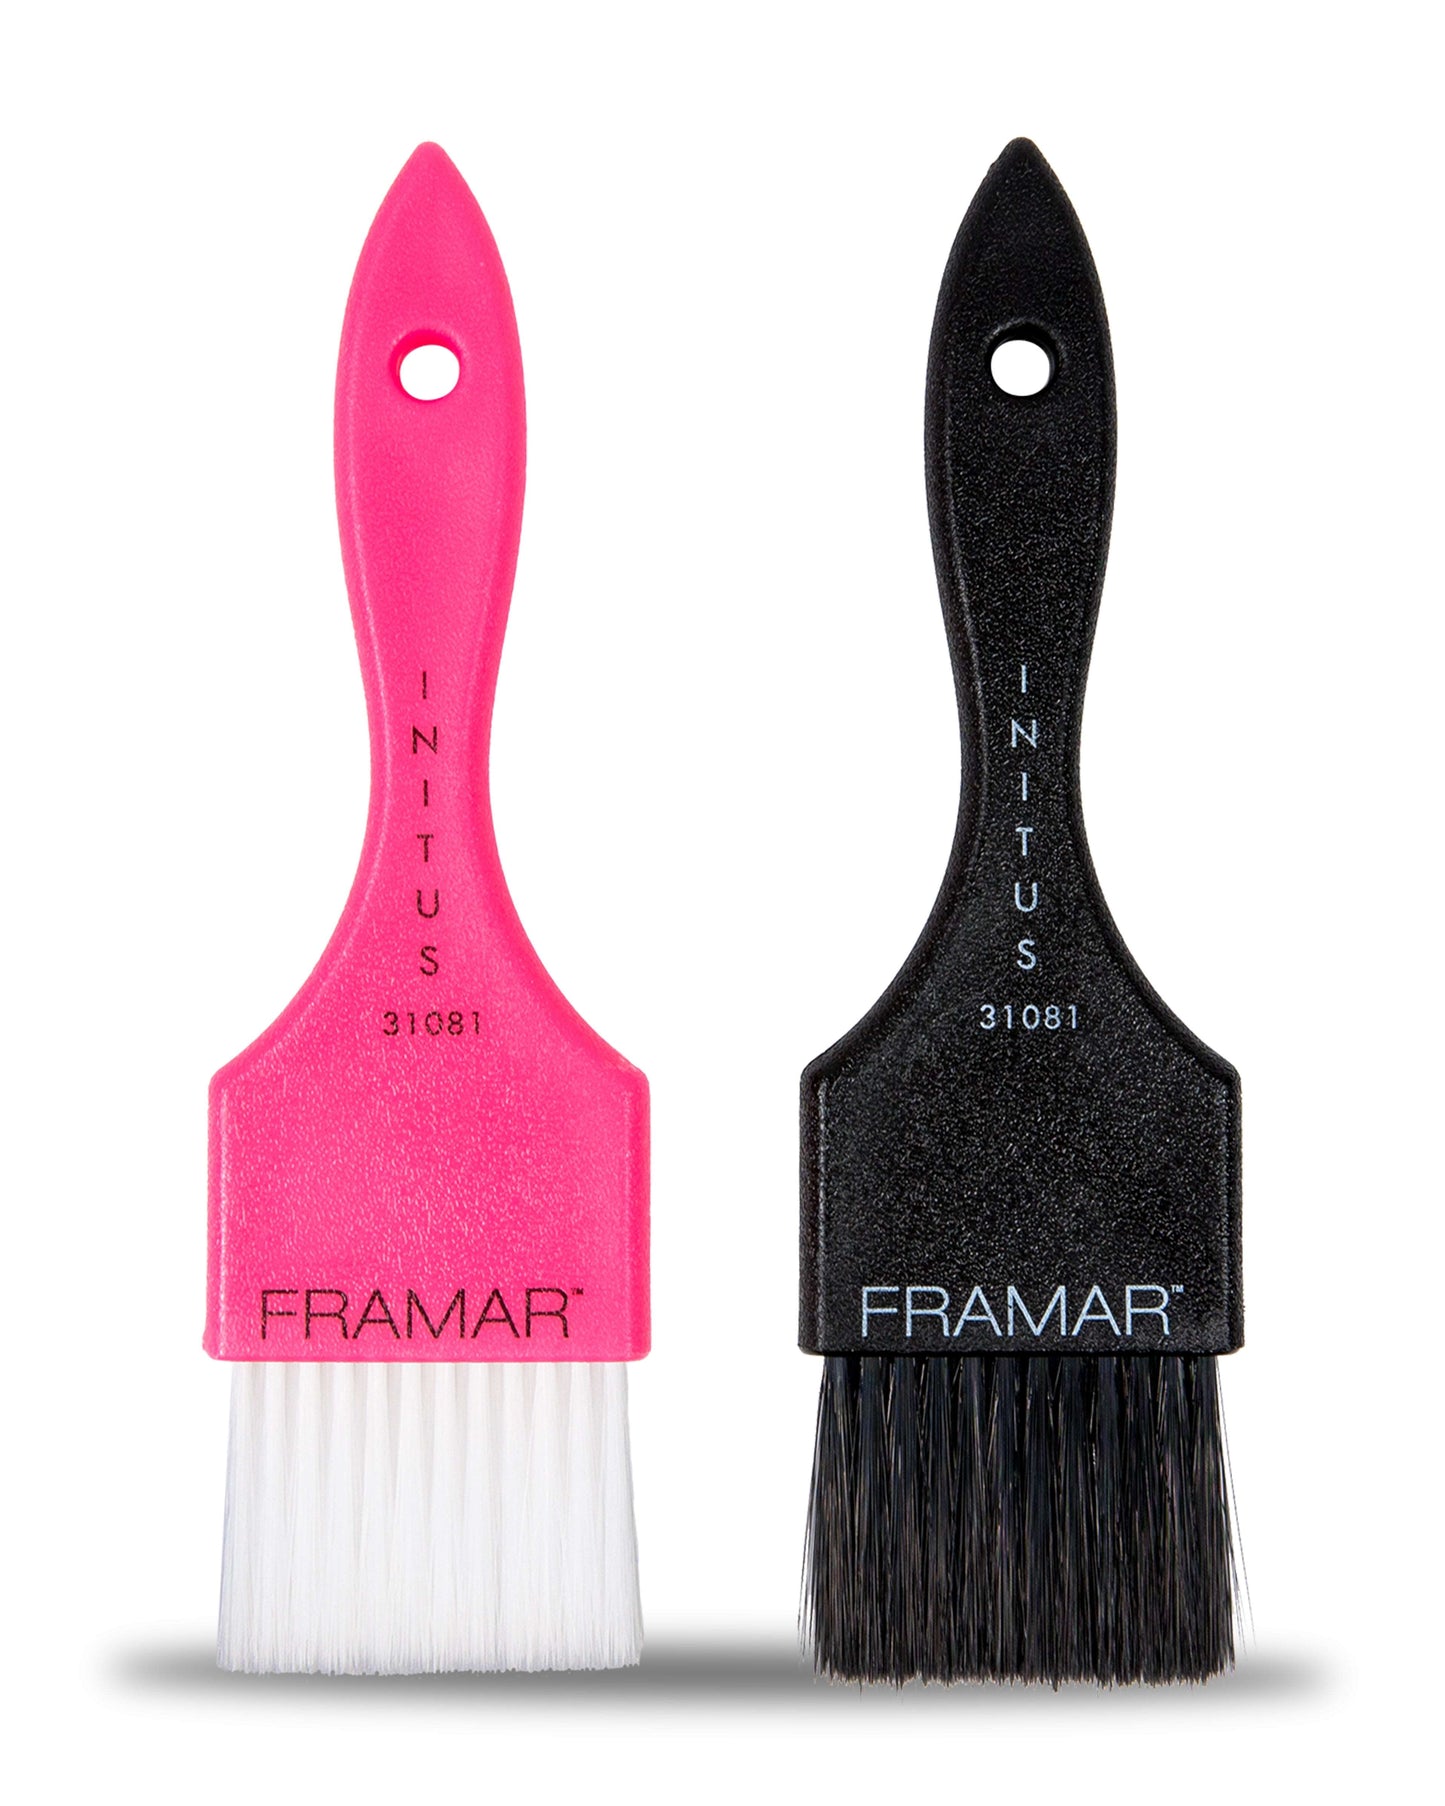 Power Painter Hair Color Brush - 2 Pack